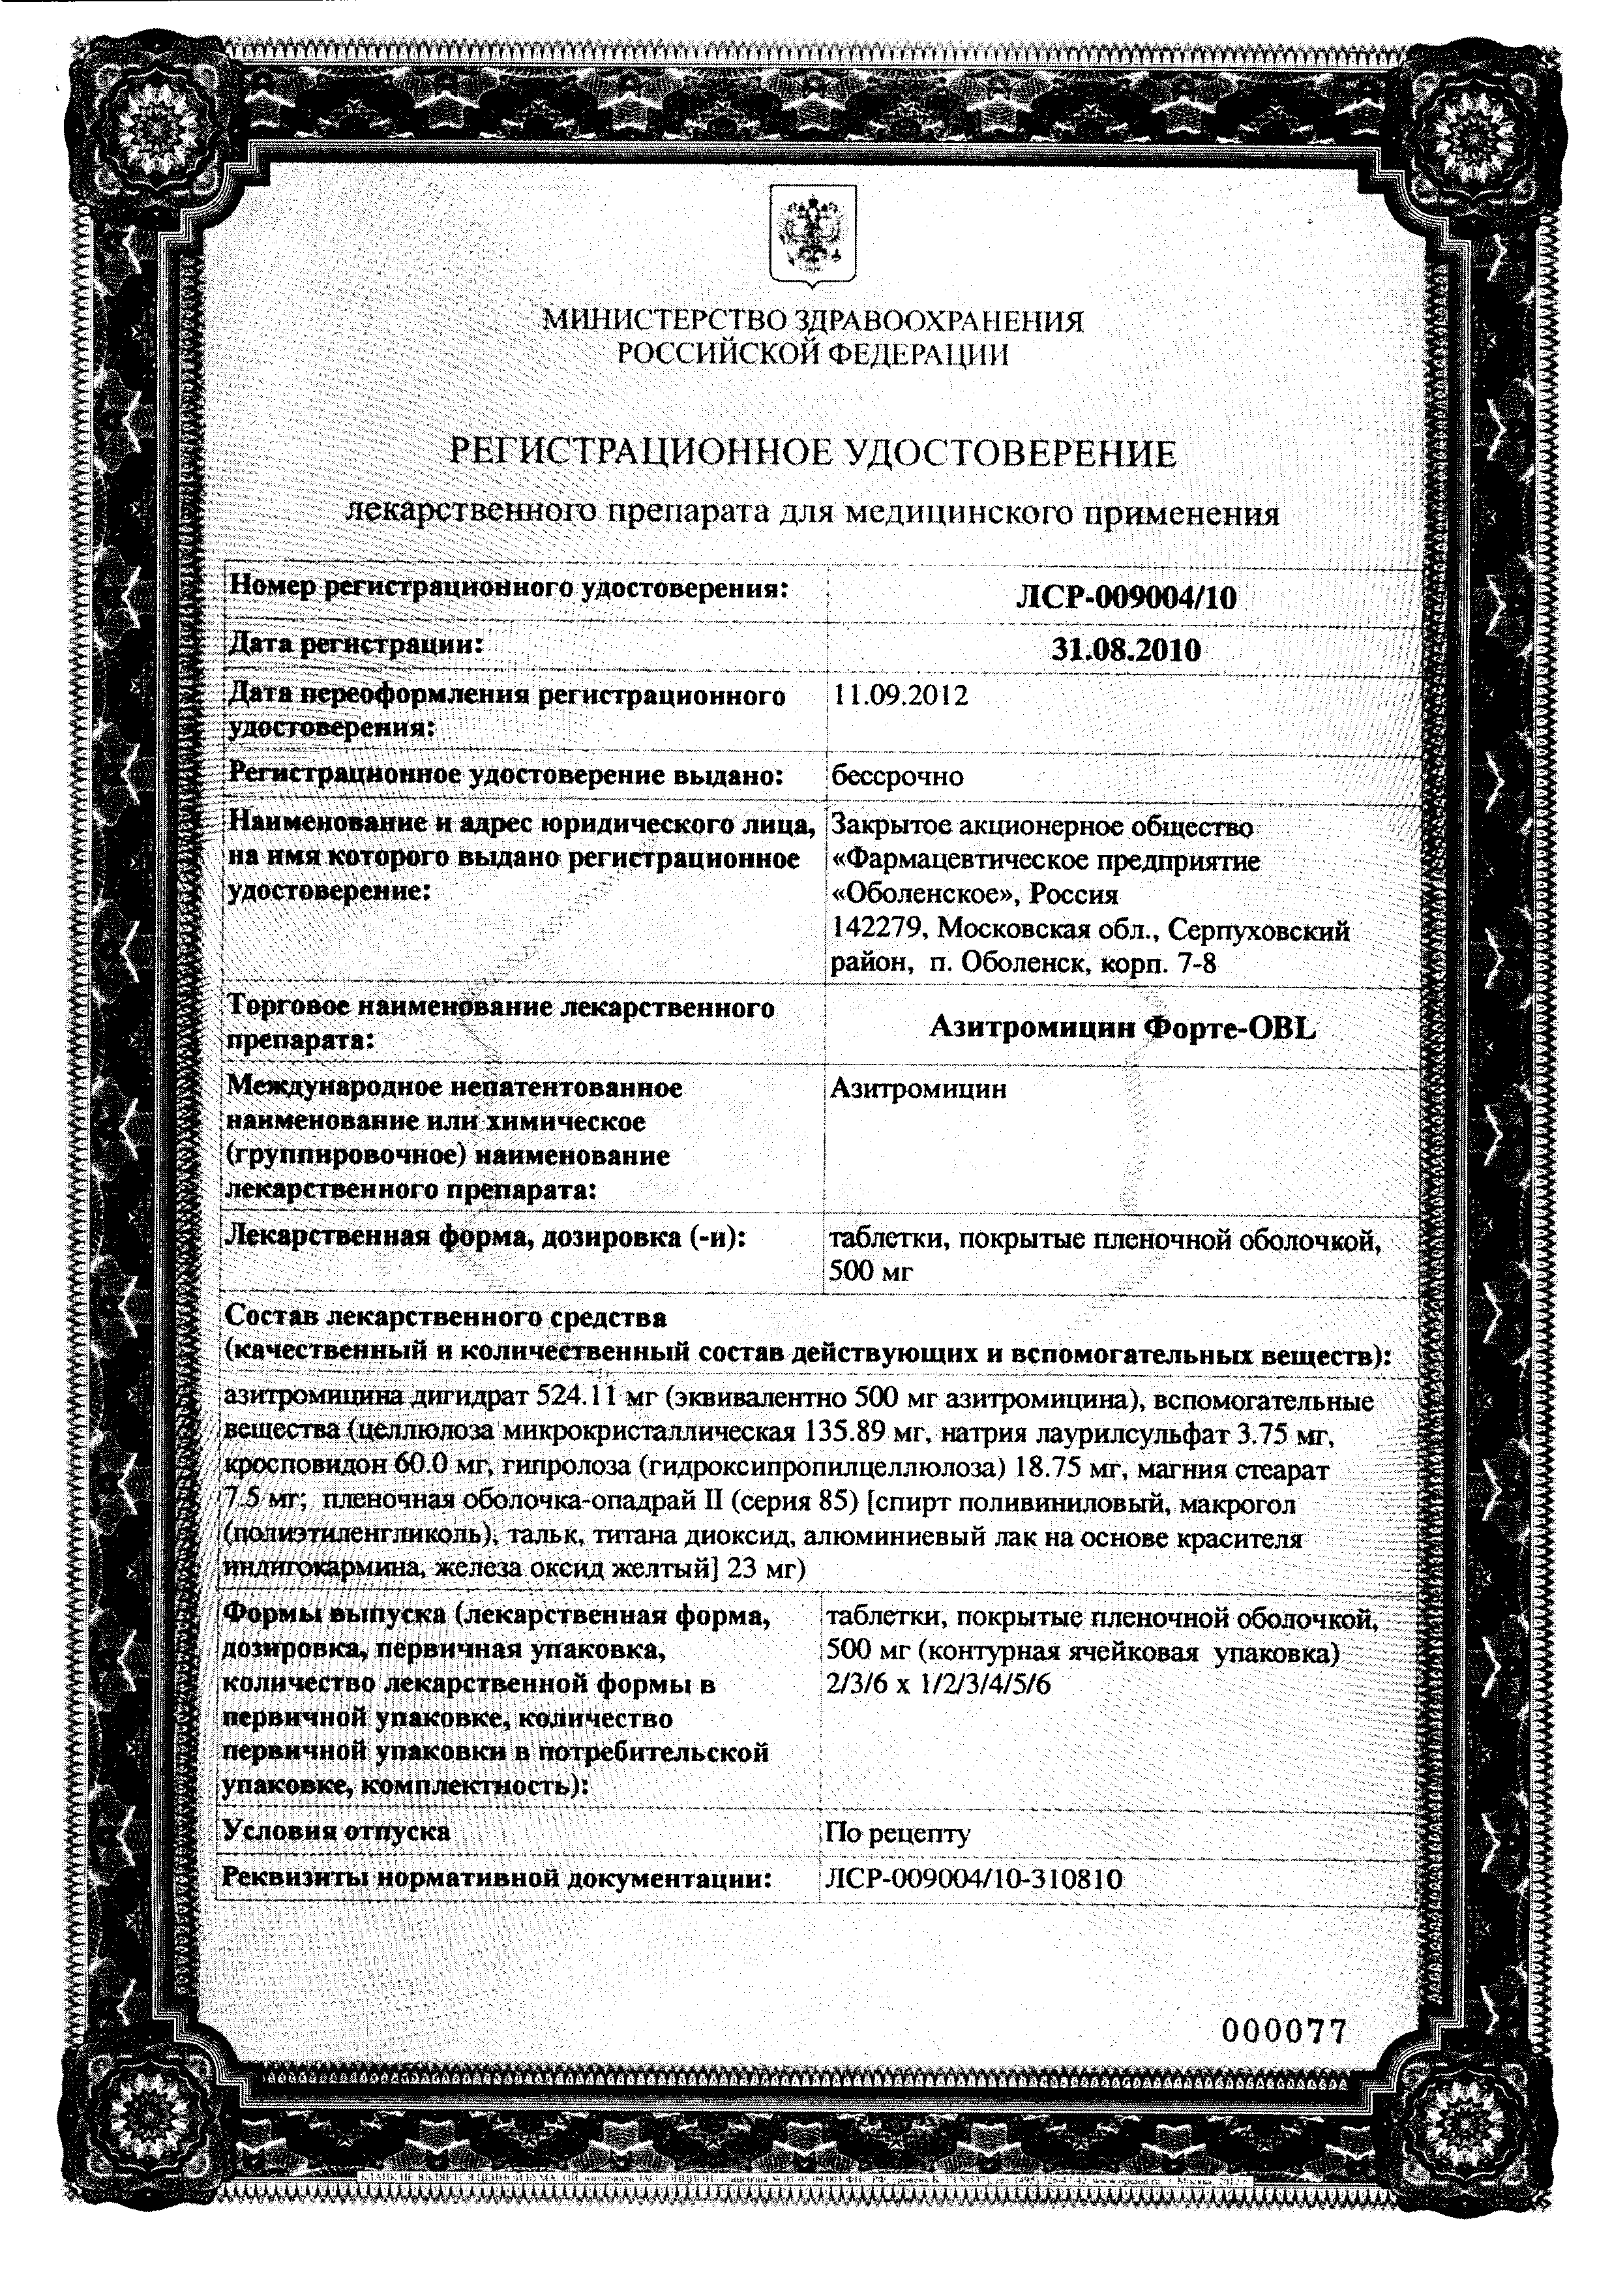 Азитромицин Форте-OBL сертификат